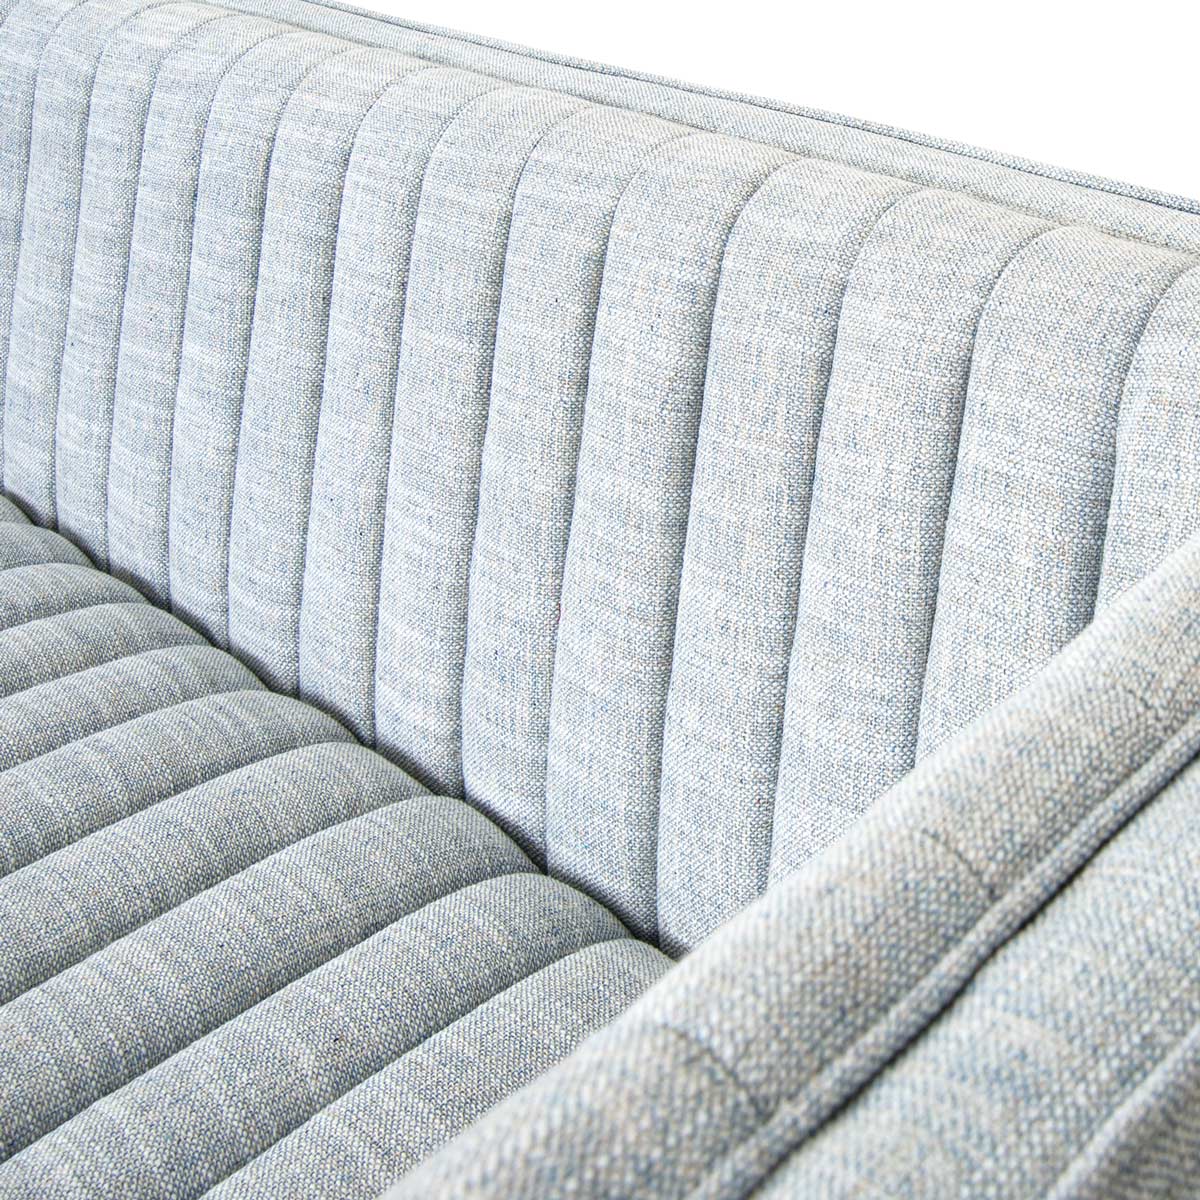 Manhattan Sofa in Linen - ModShop1.com